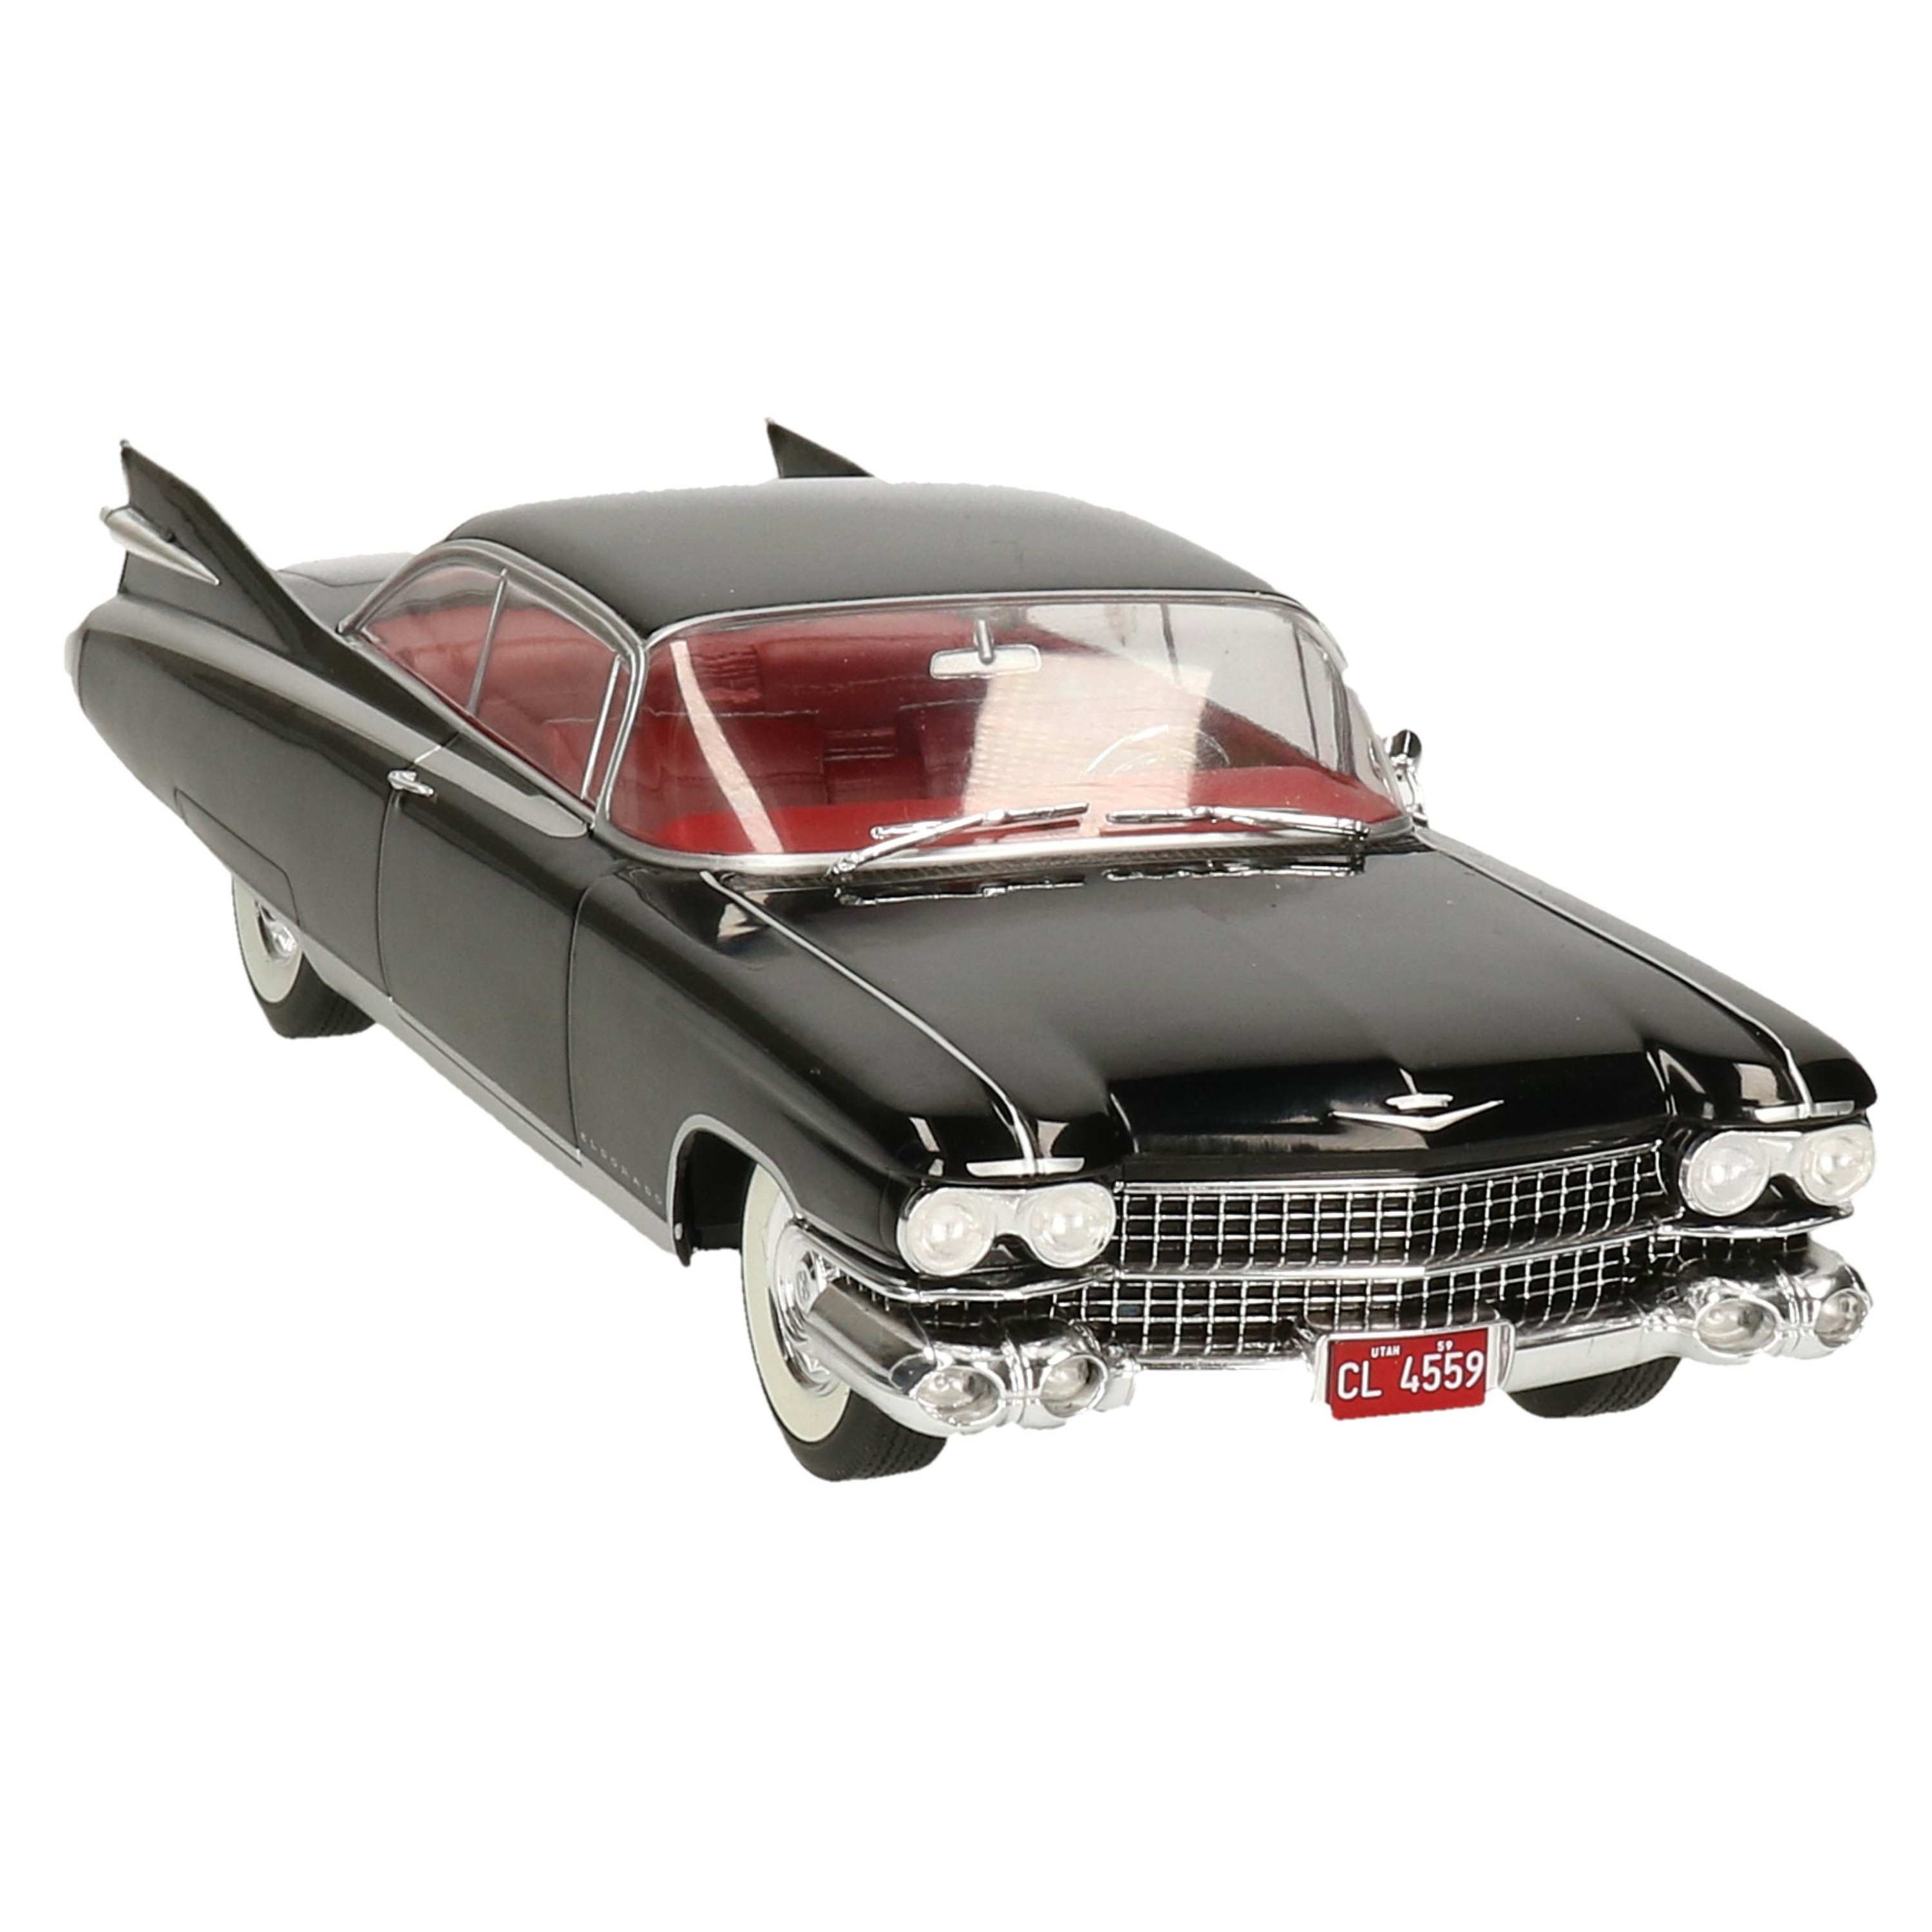 Modelauto-speelgoedauto Cadillac Eldorado 1959 zwart schaal 1:24-24 x 8 x 5 cm